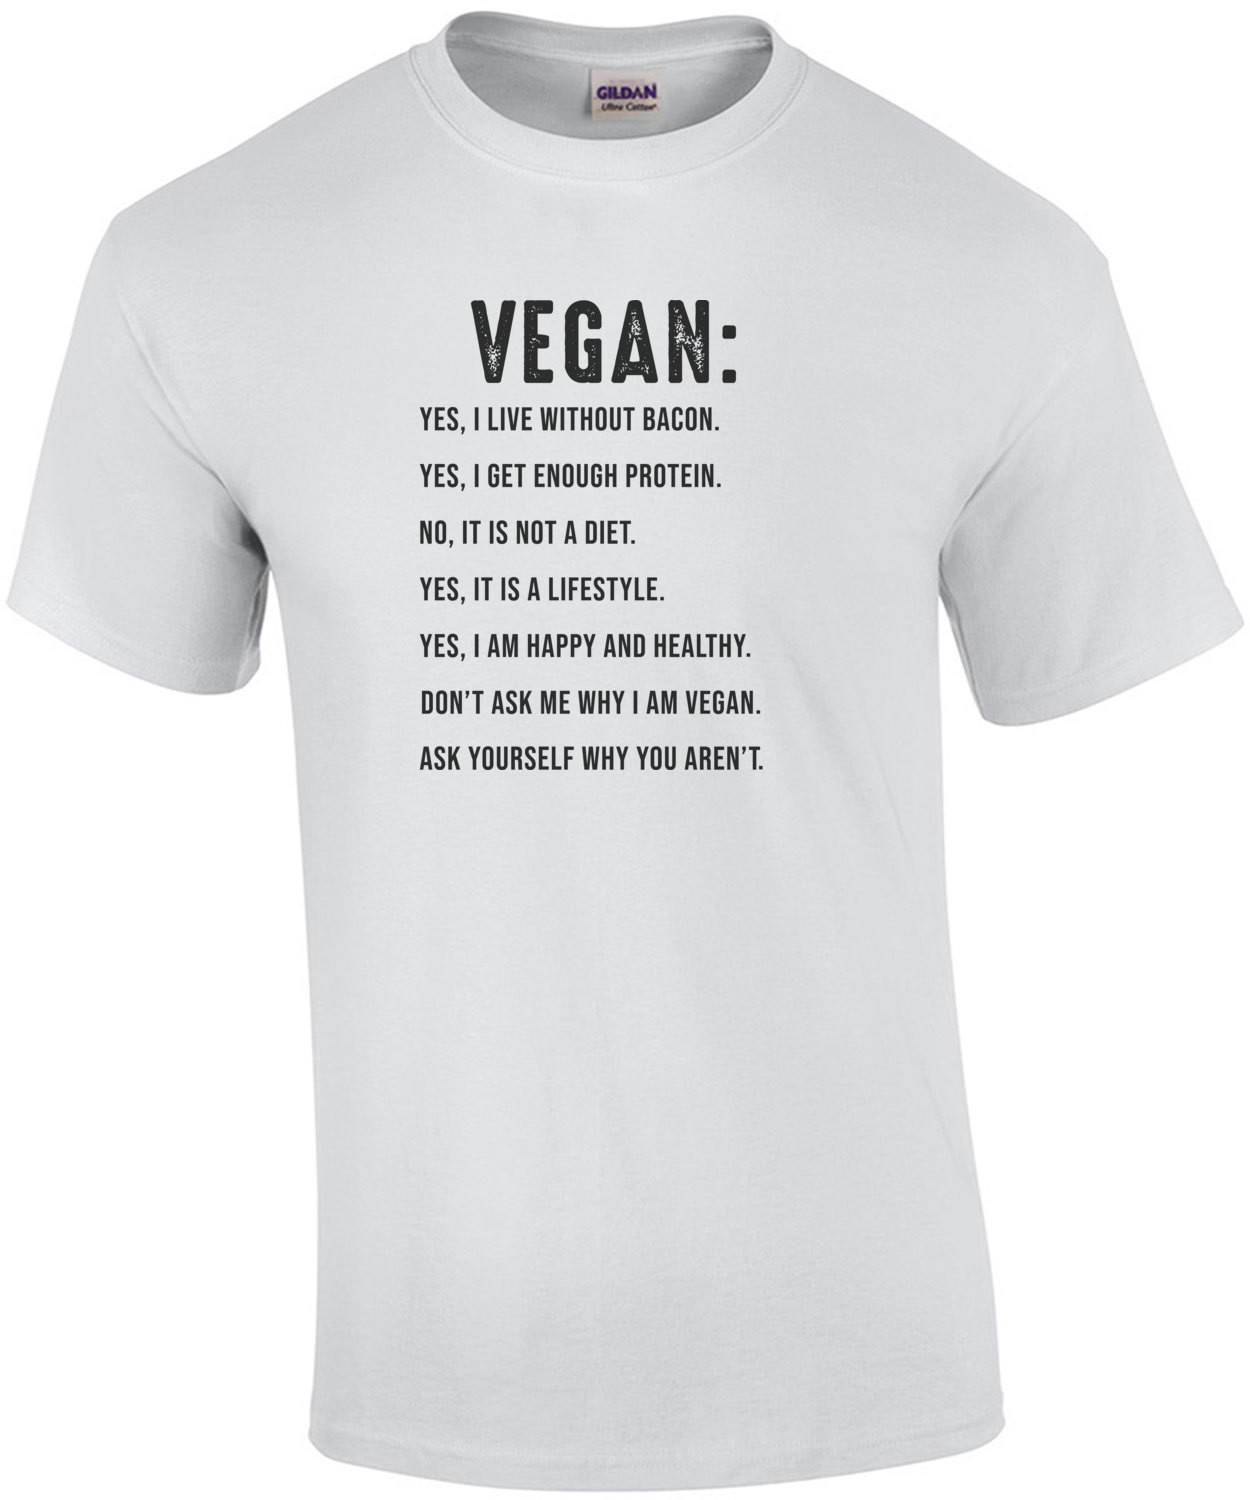 Vegan: Yes, I live without bacon - funny vegan t-shirt